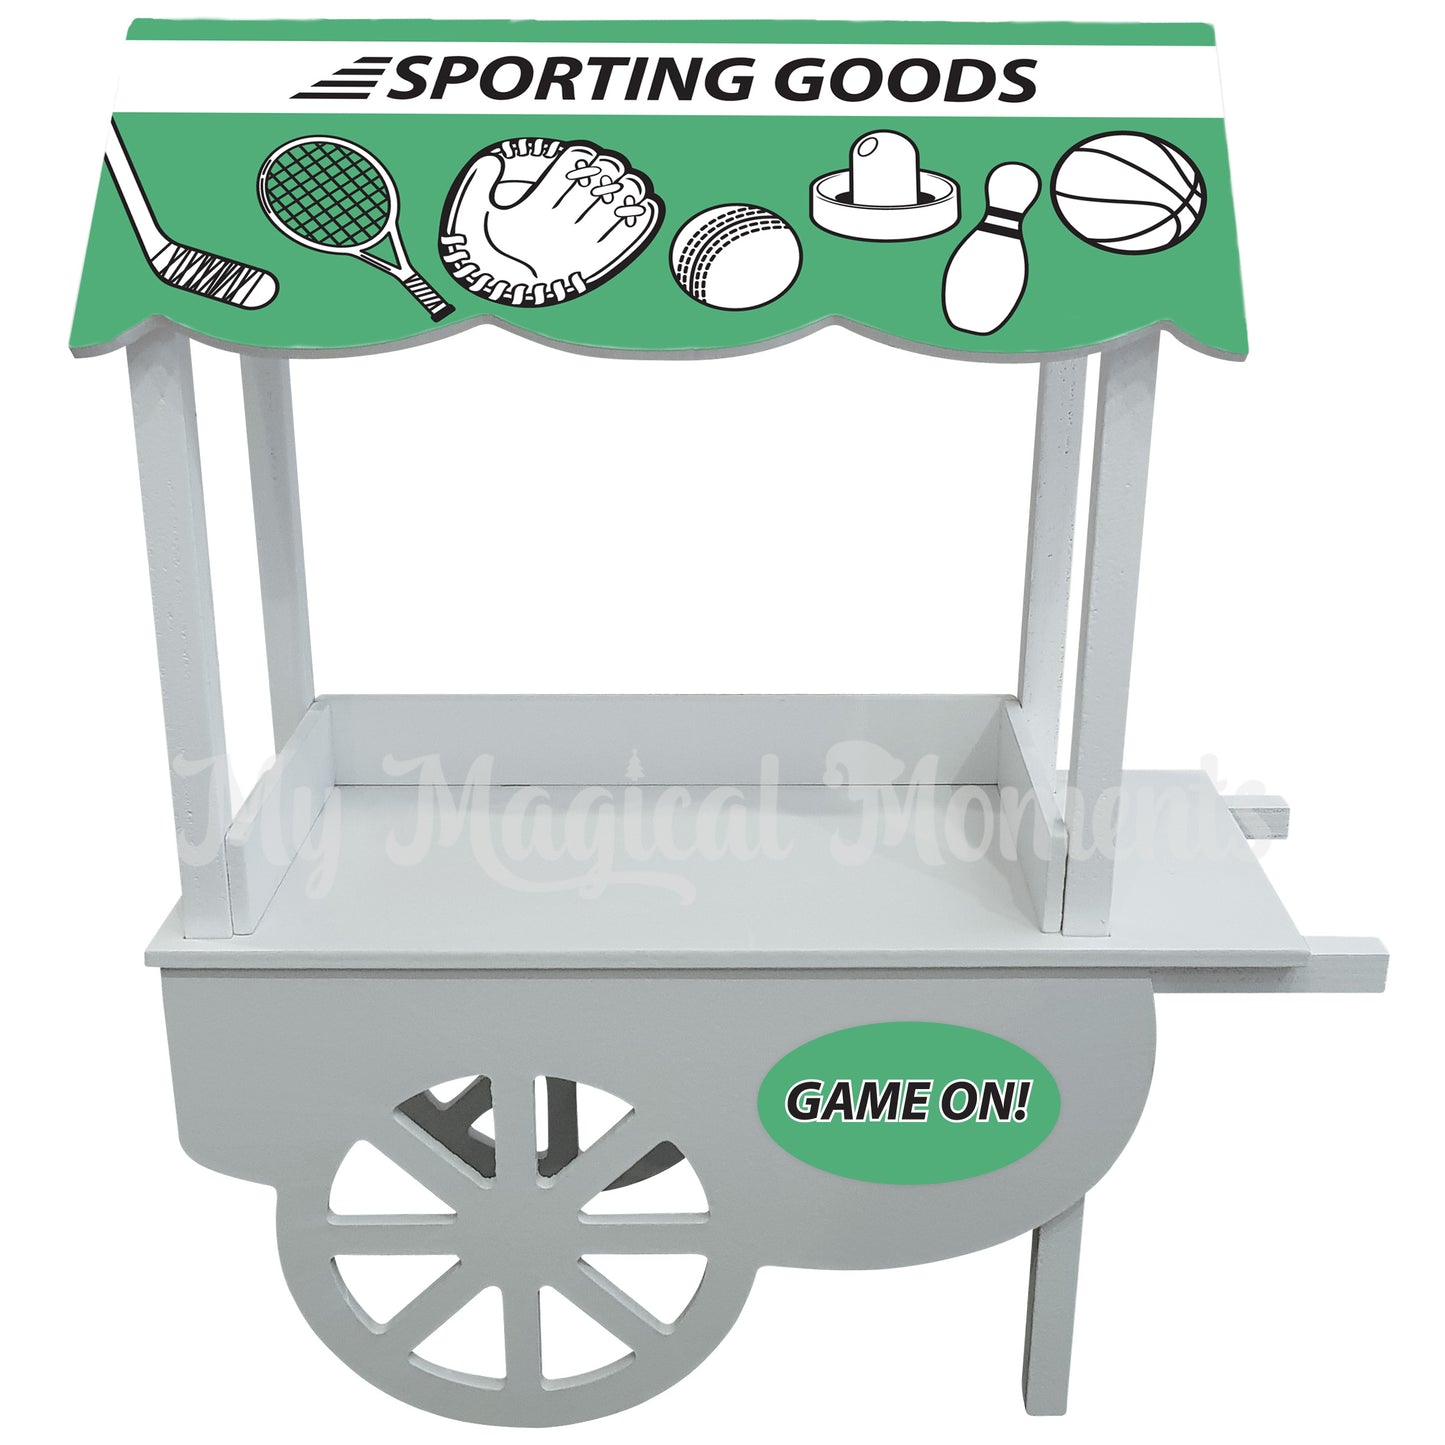 Elf sport Store printable